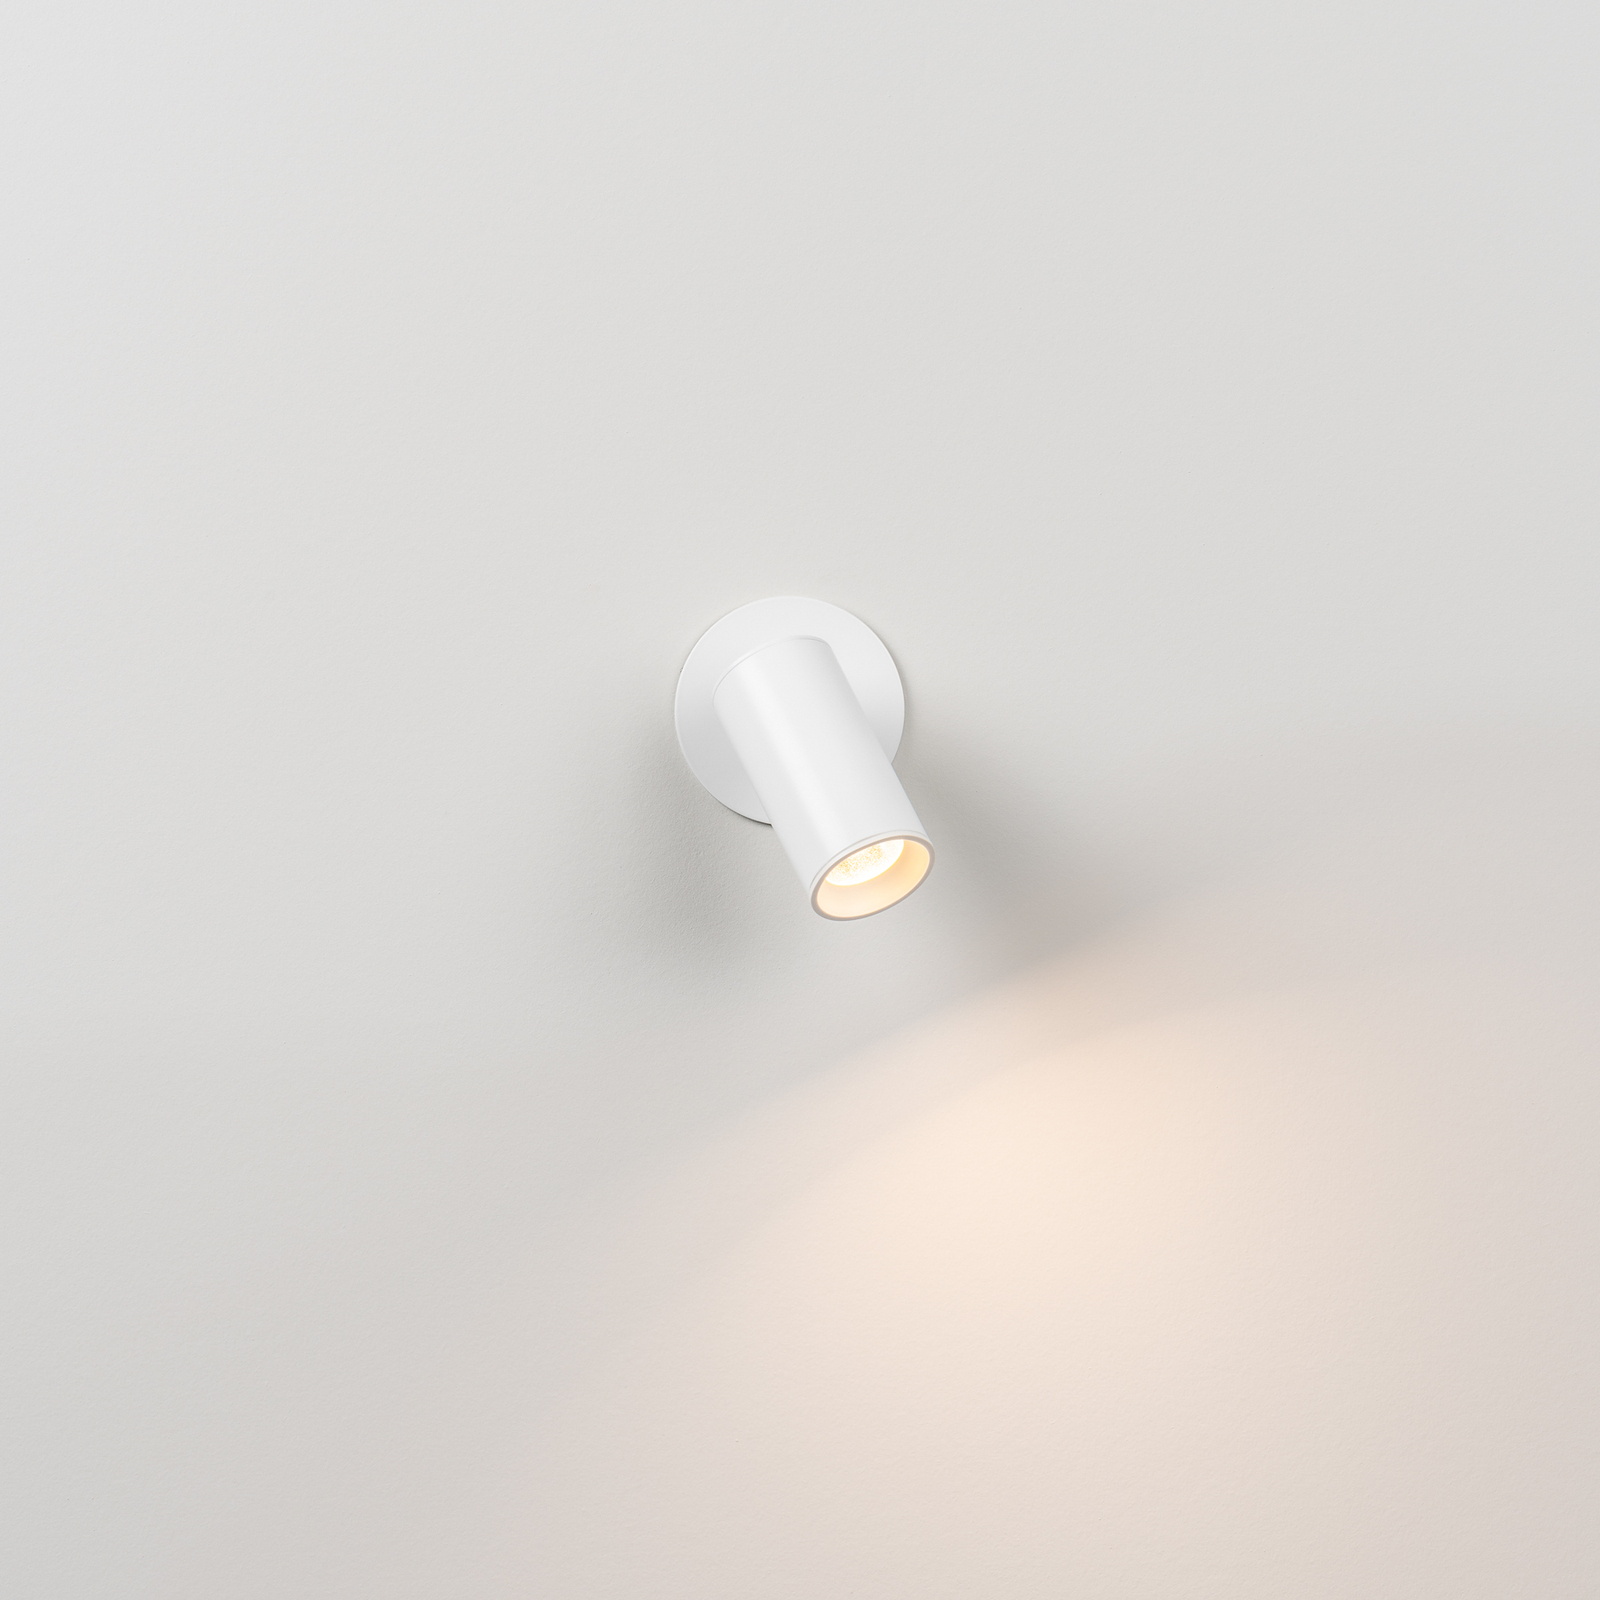 Milan Haul LED recessed light, white